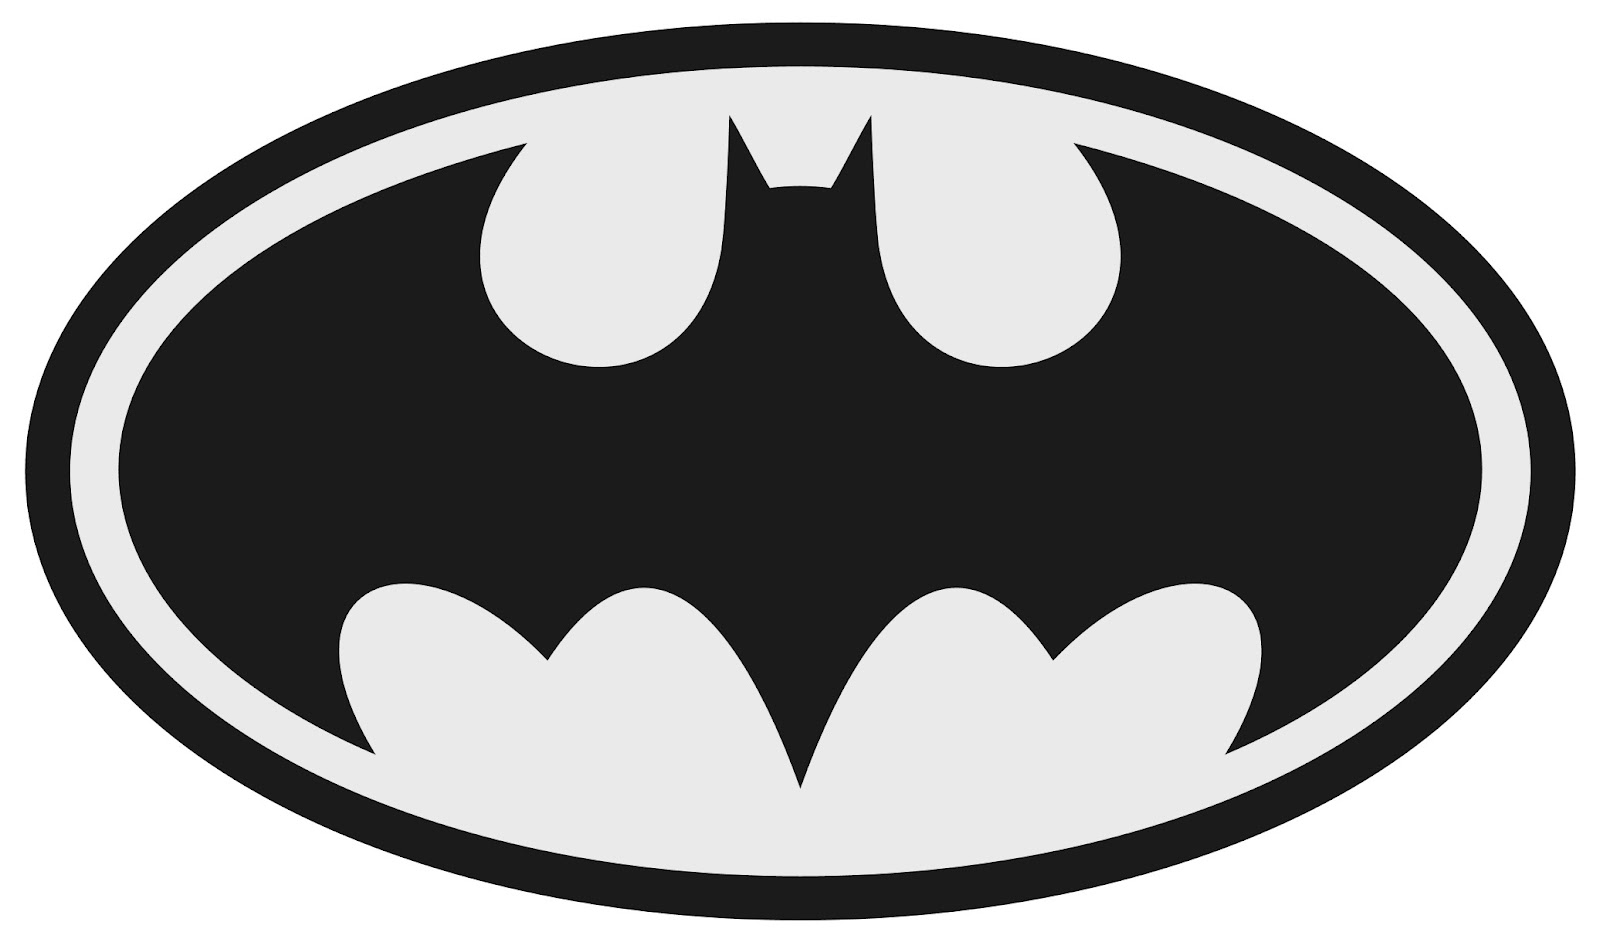 Superhero symbol silhouette clipart